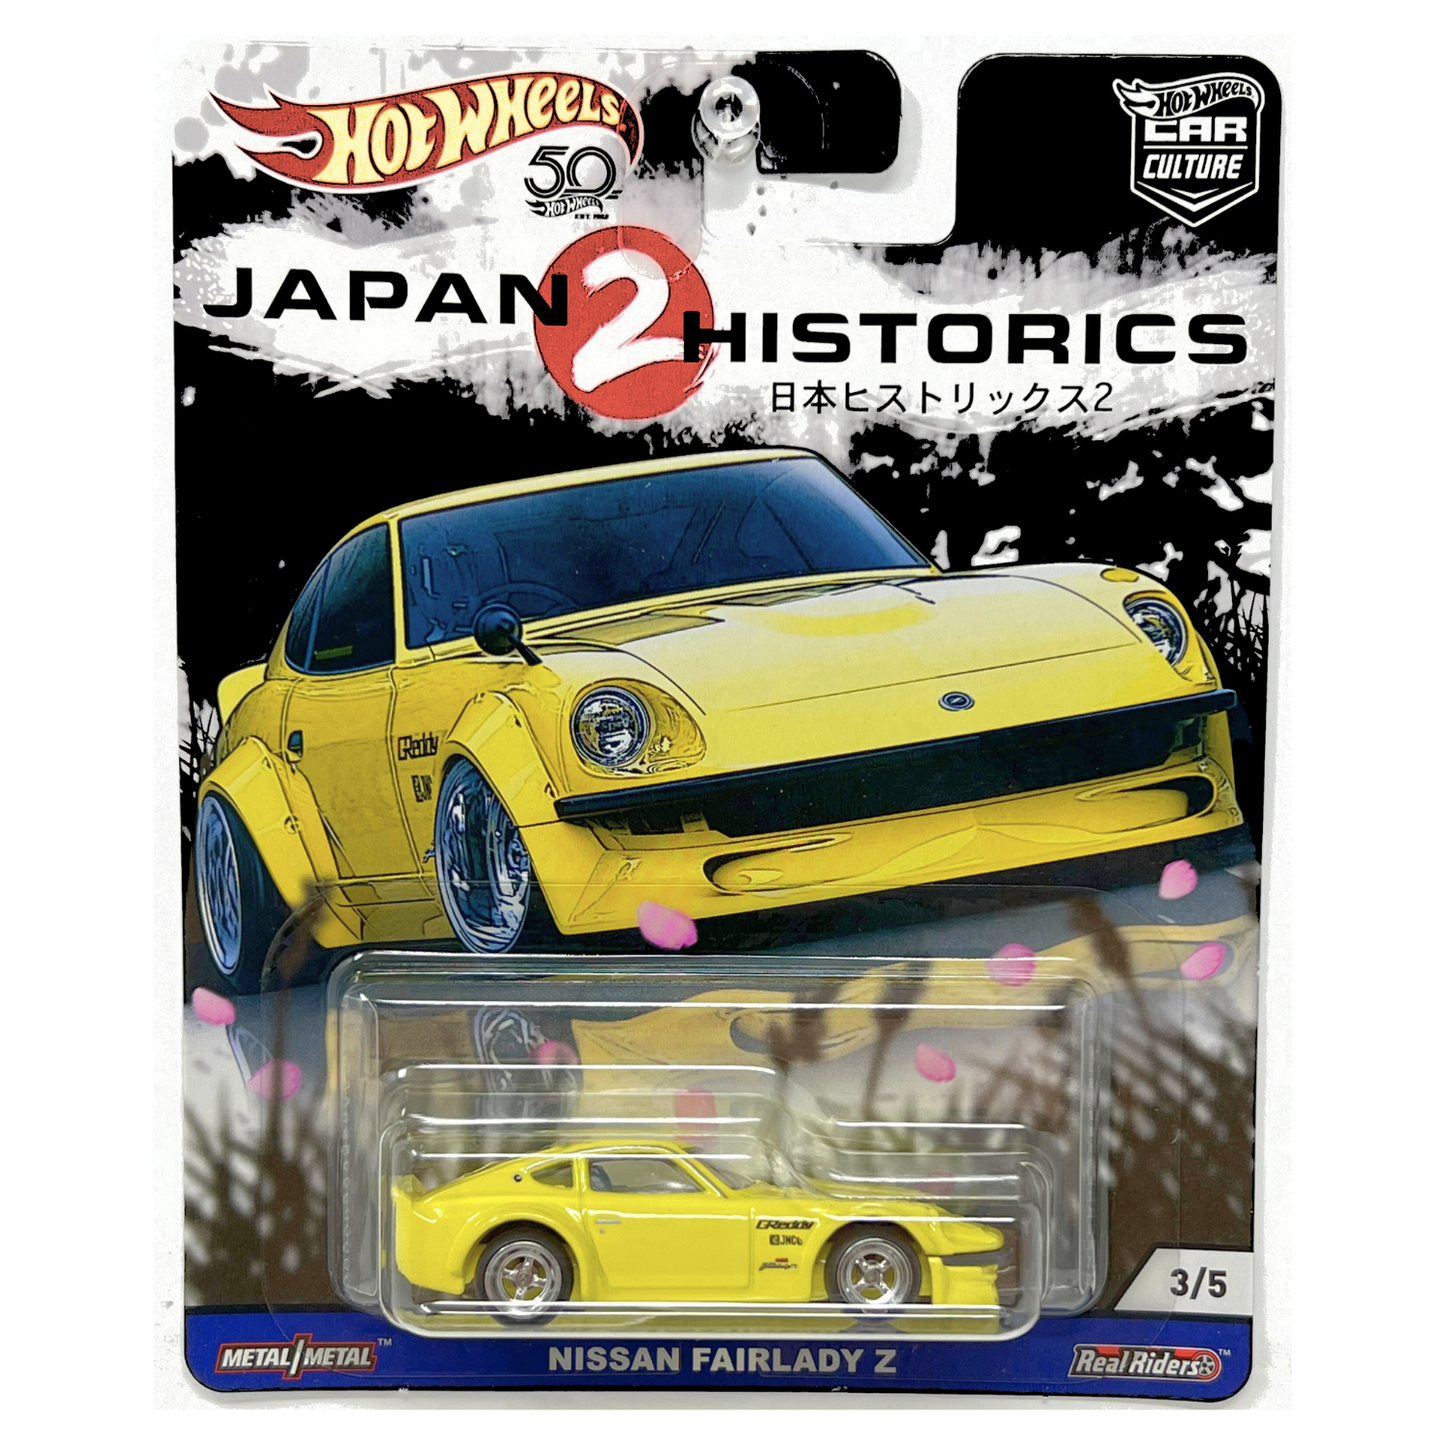 Hot Wheels Japan Historics 2 Nissan Fairlady Z Real Riders 1:64 Diecast